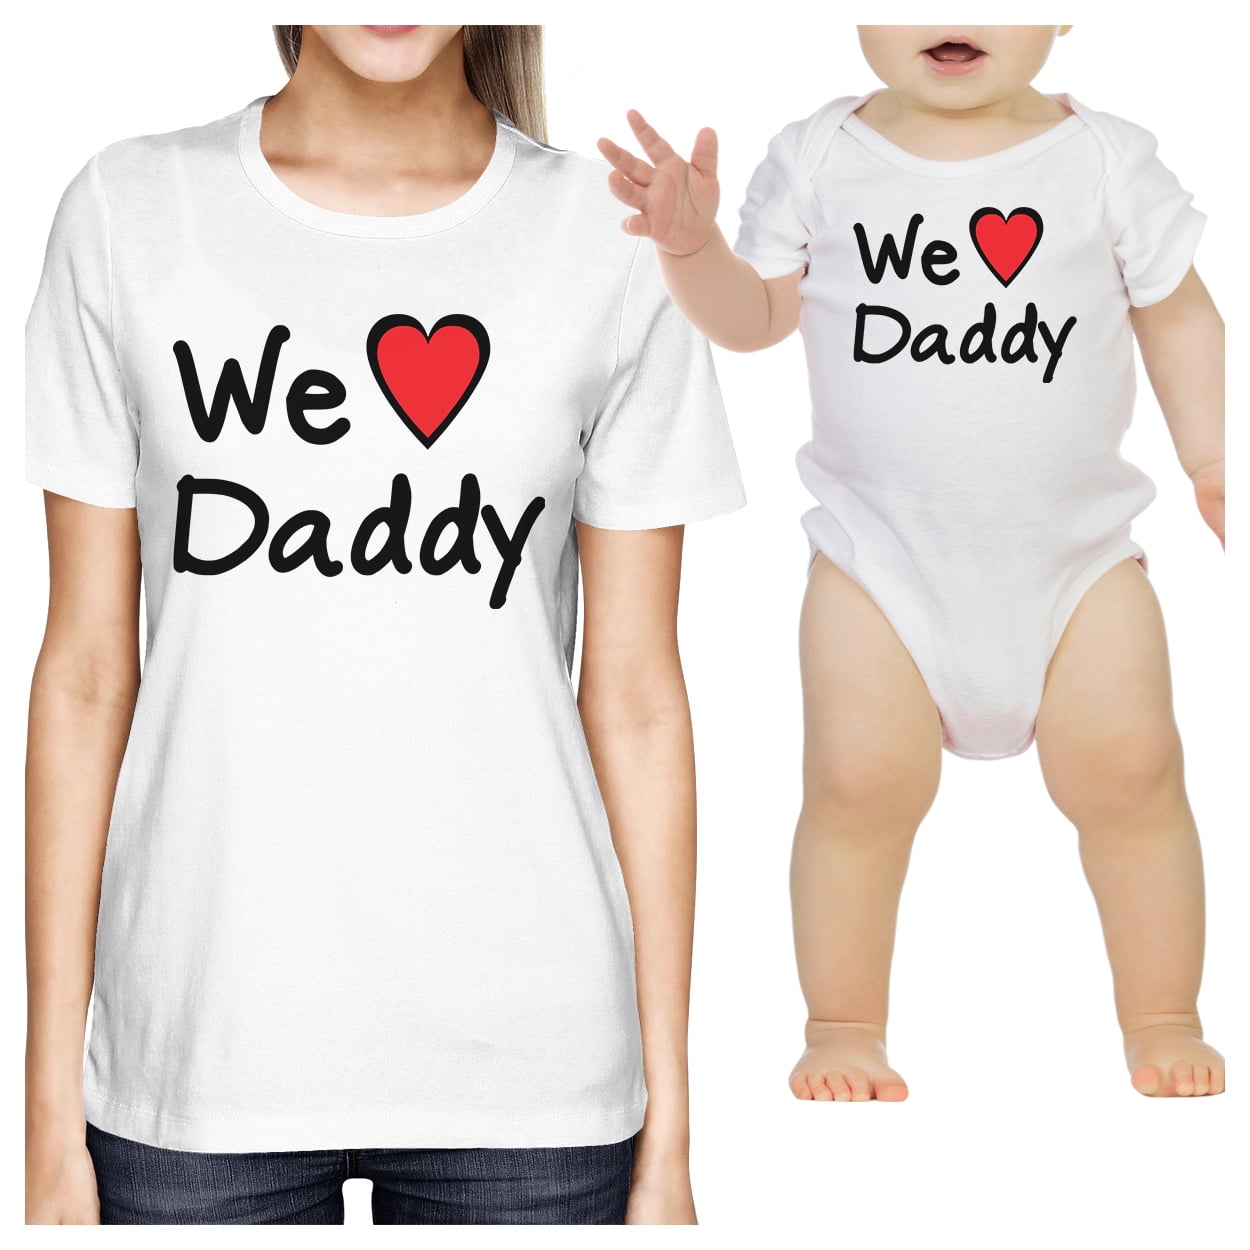 dad and baby matching shirts